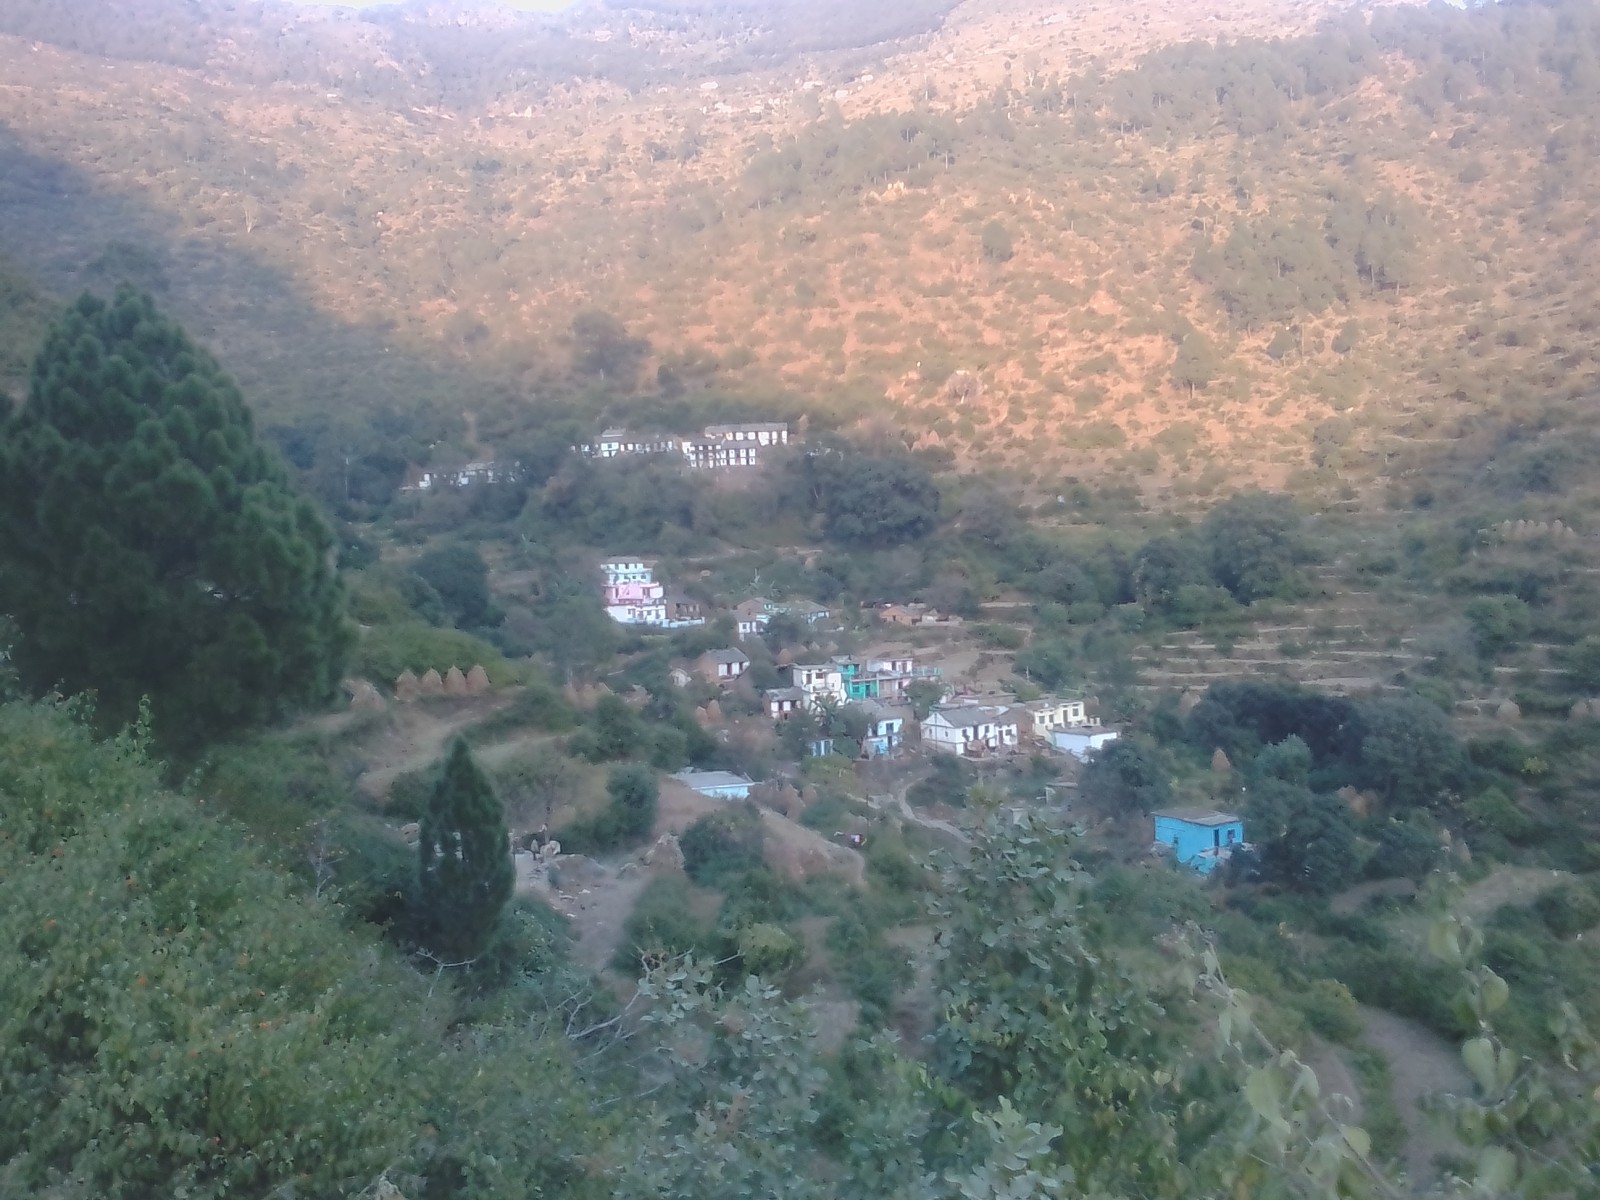 Sunsyari village, Nainital